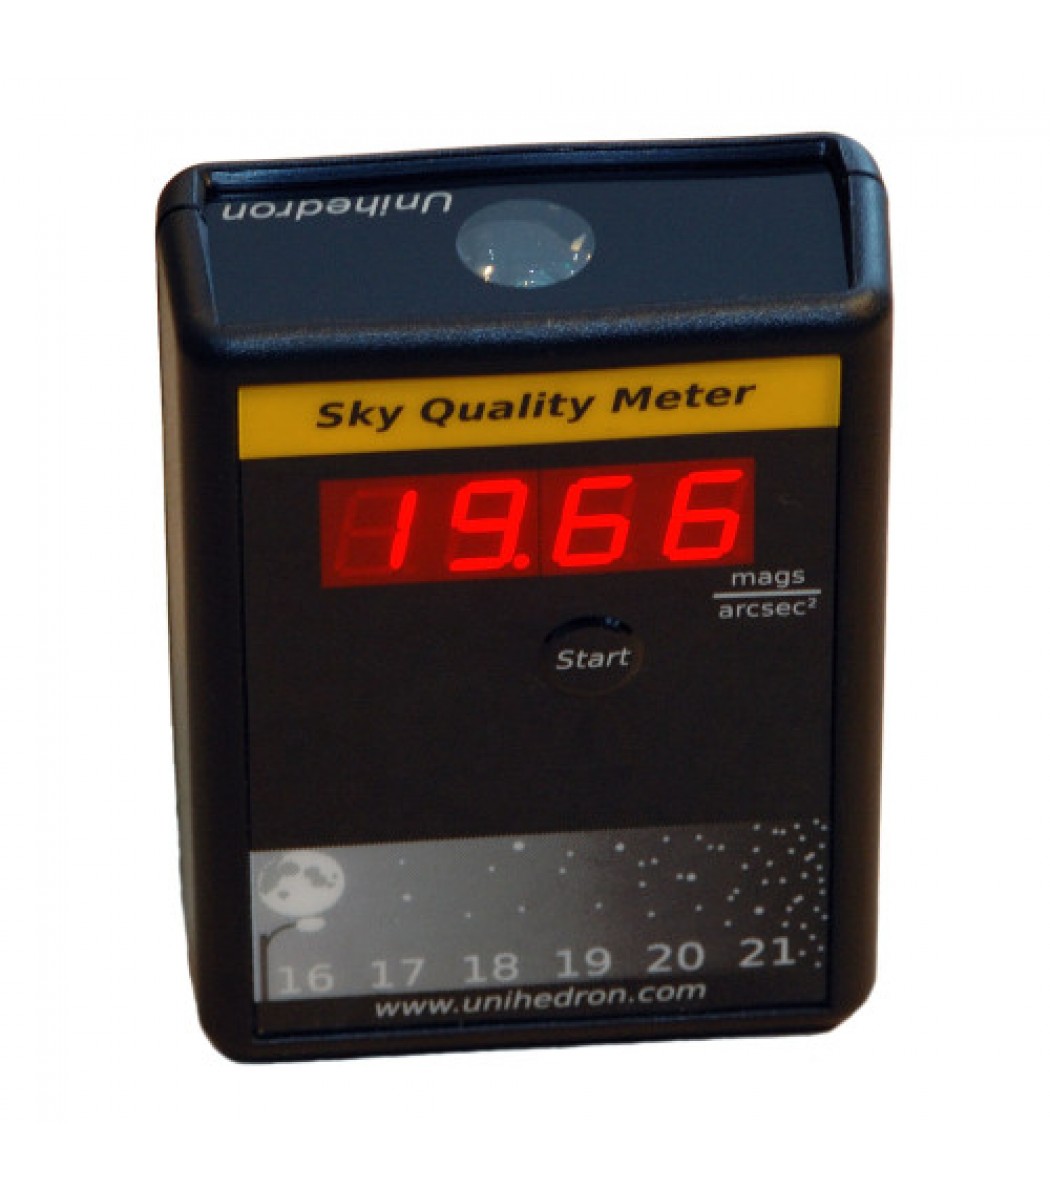  SQM - Sky Quality Meter L 